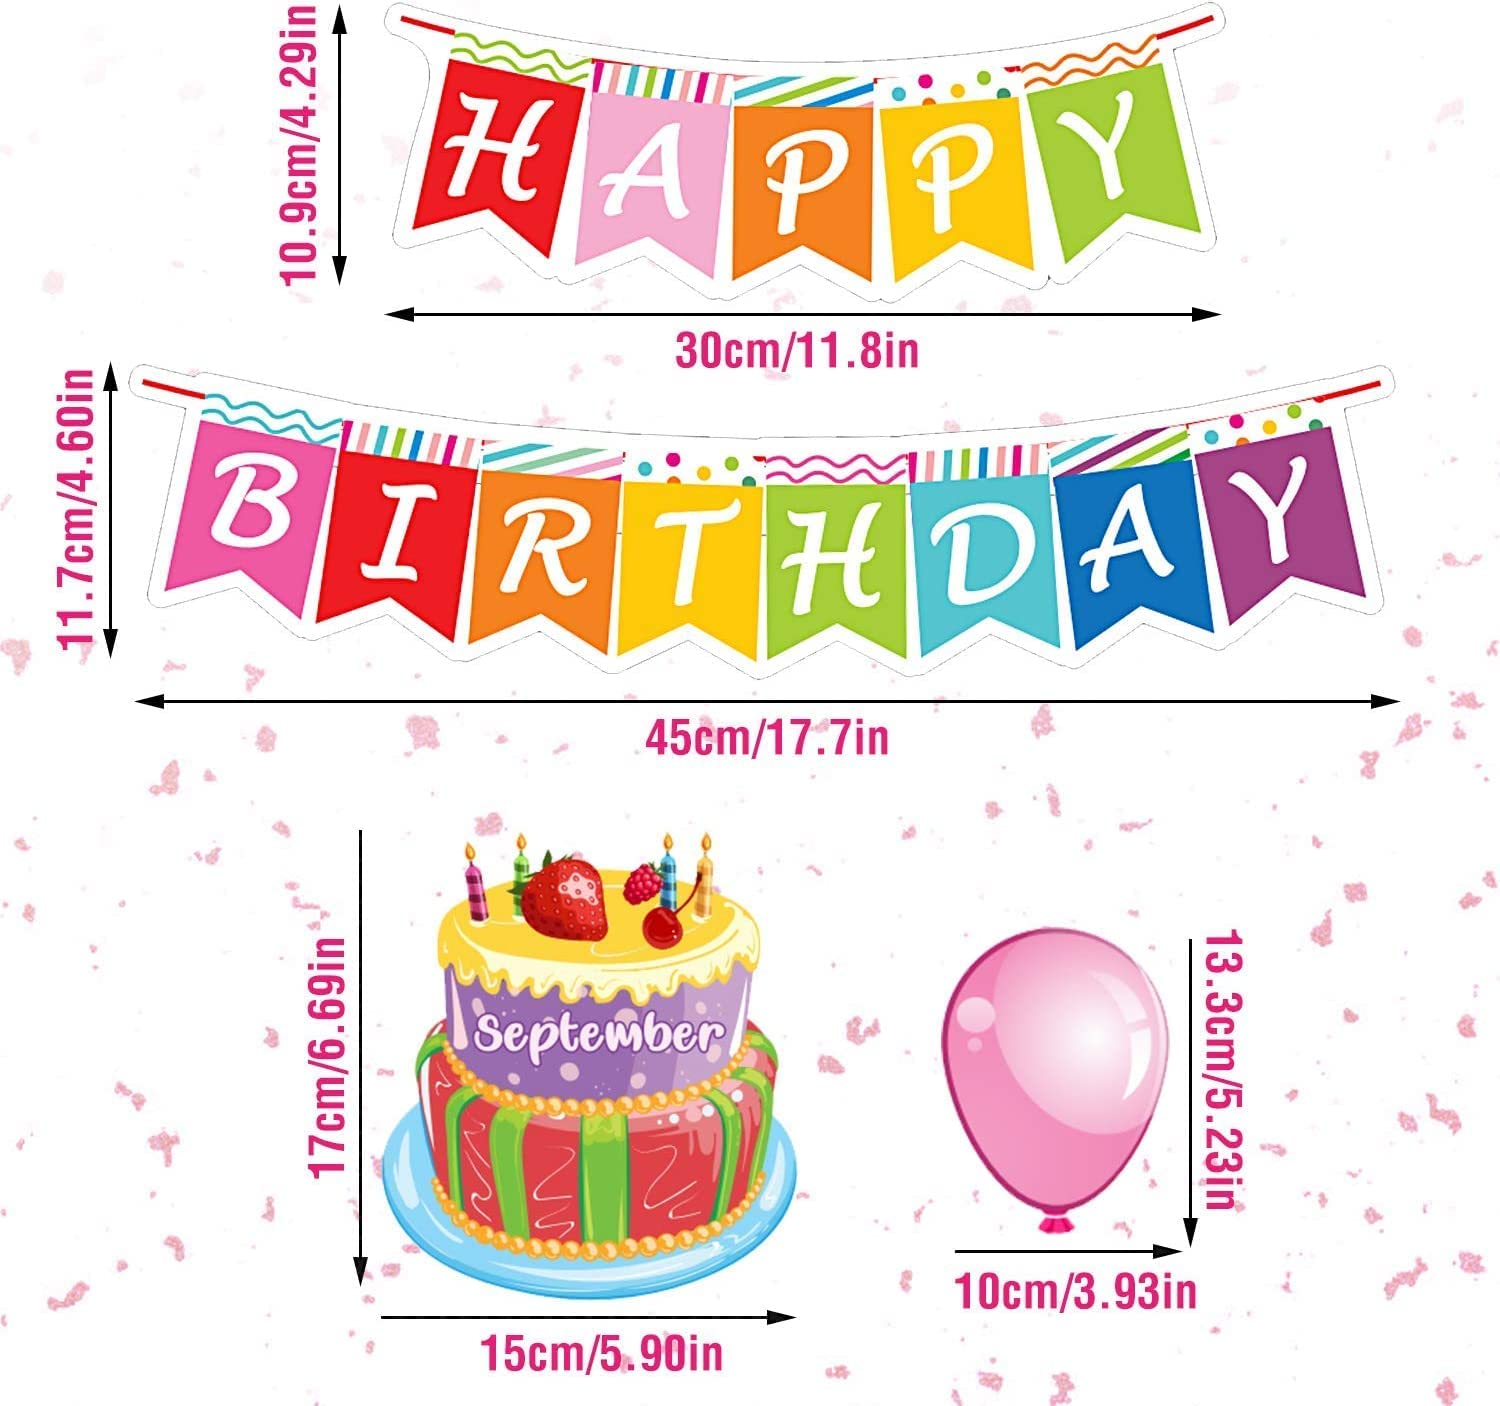  Happy Birthday stickers set consisting of 20 pieces - Multi Color